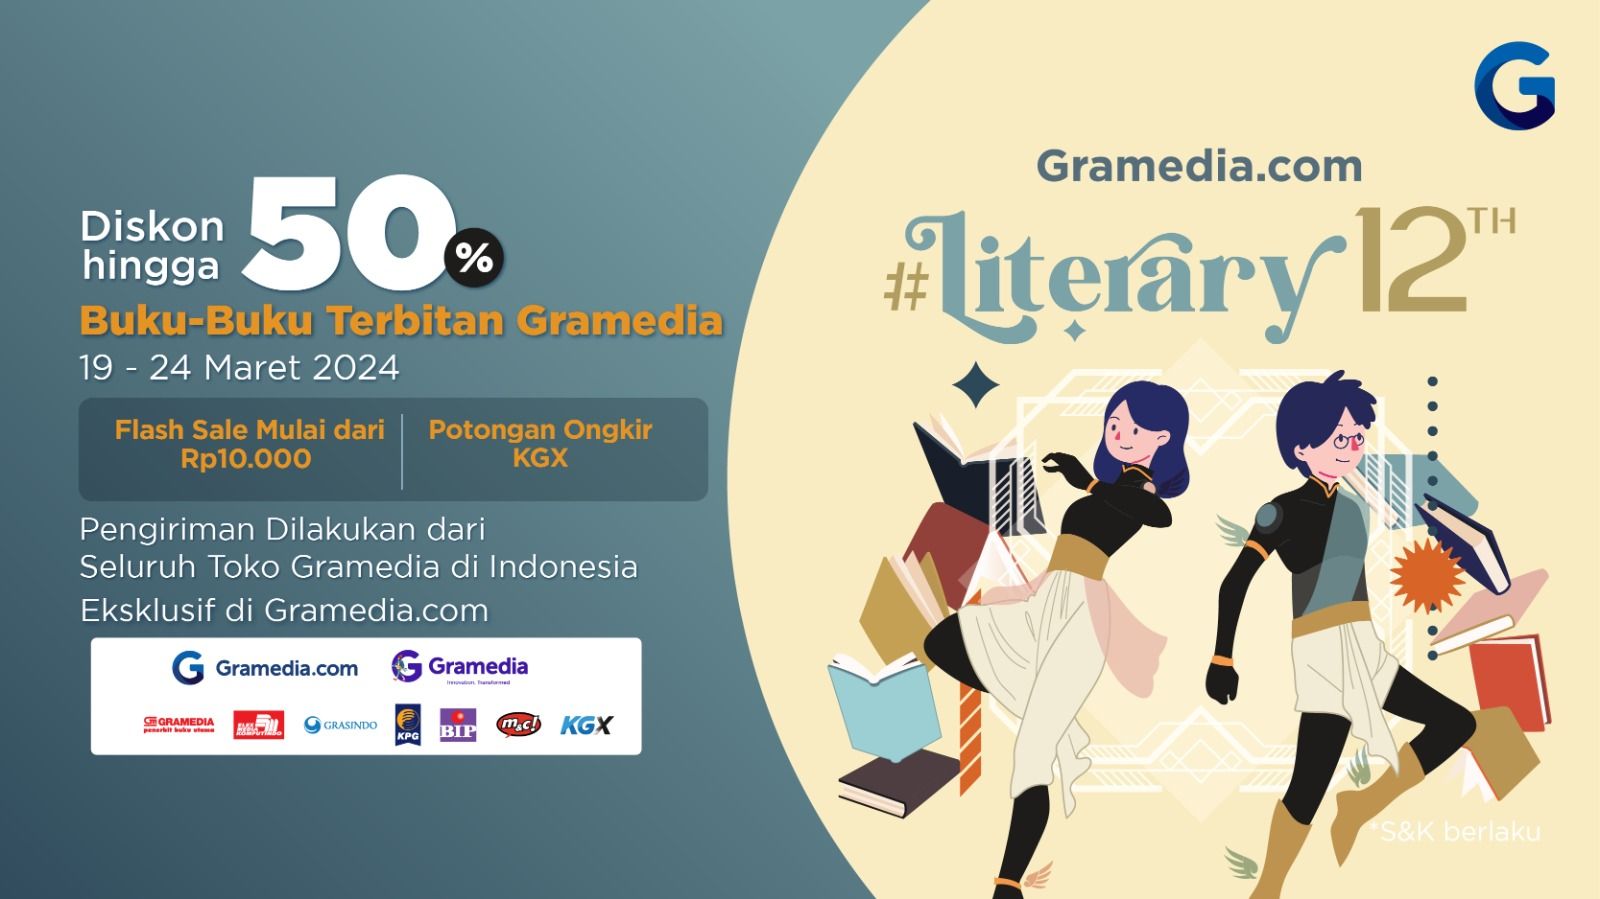 #Literary12th: Diskon 50% Spesial HUT Gramedia.com!